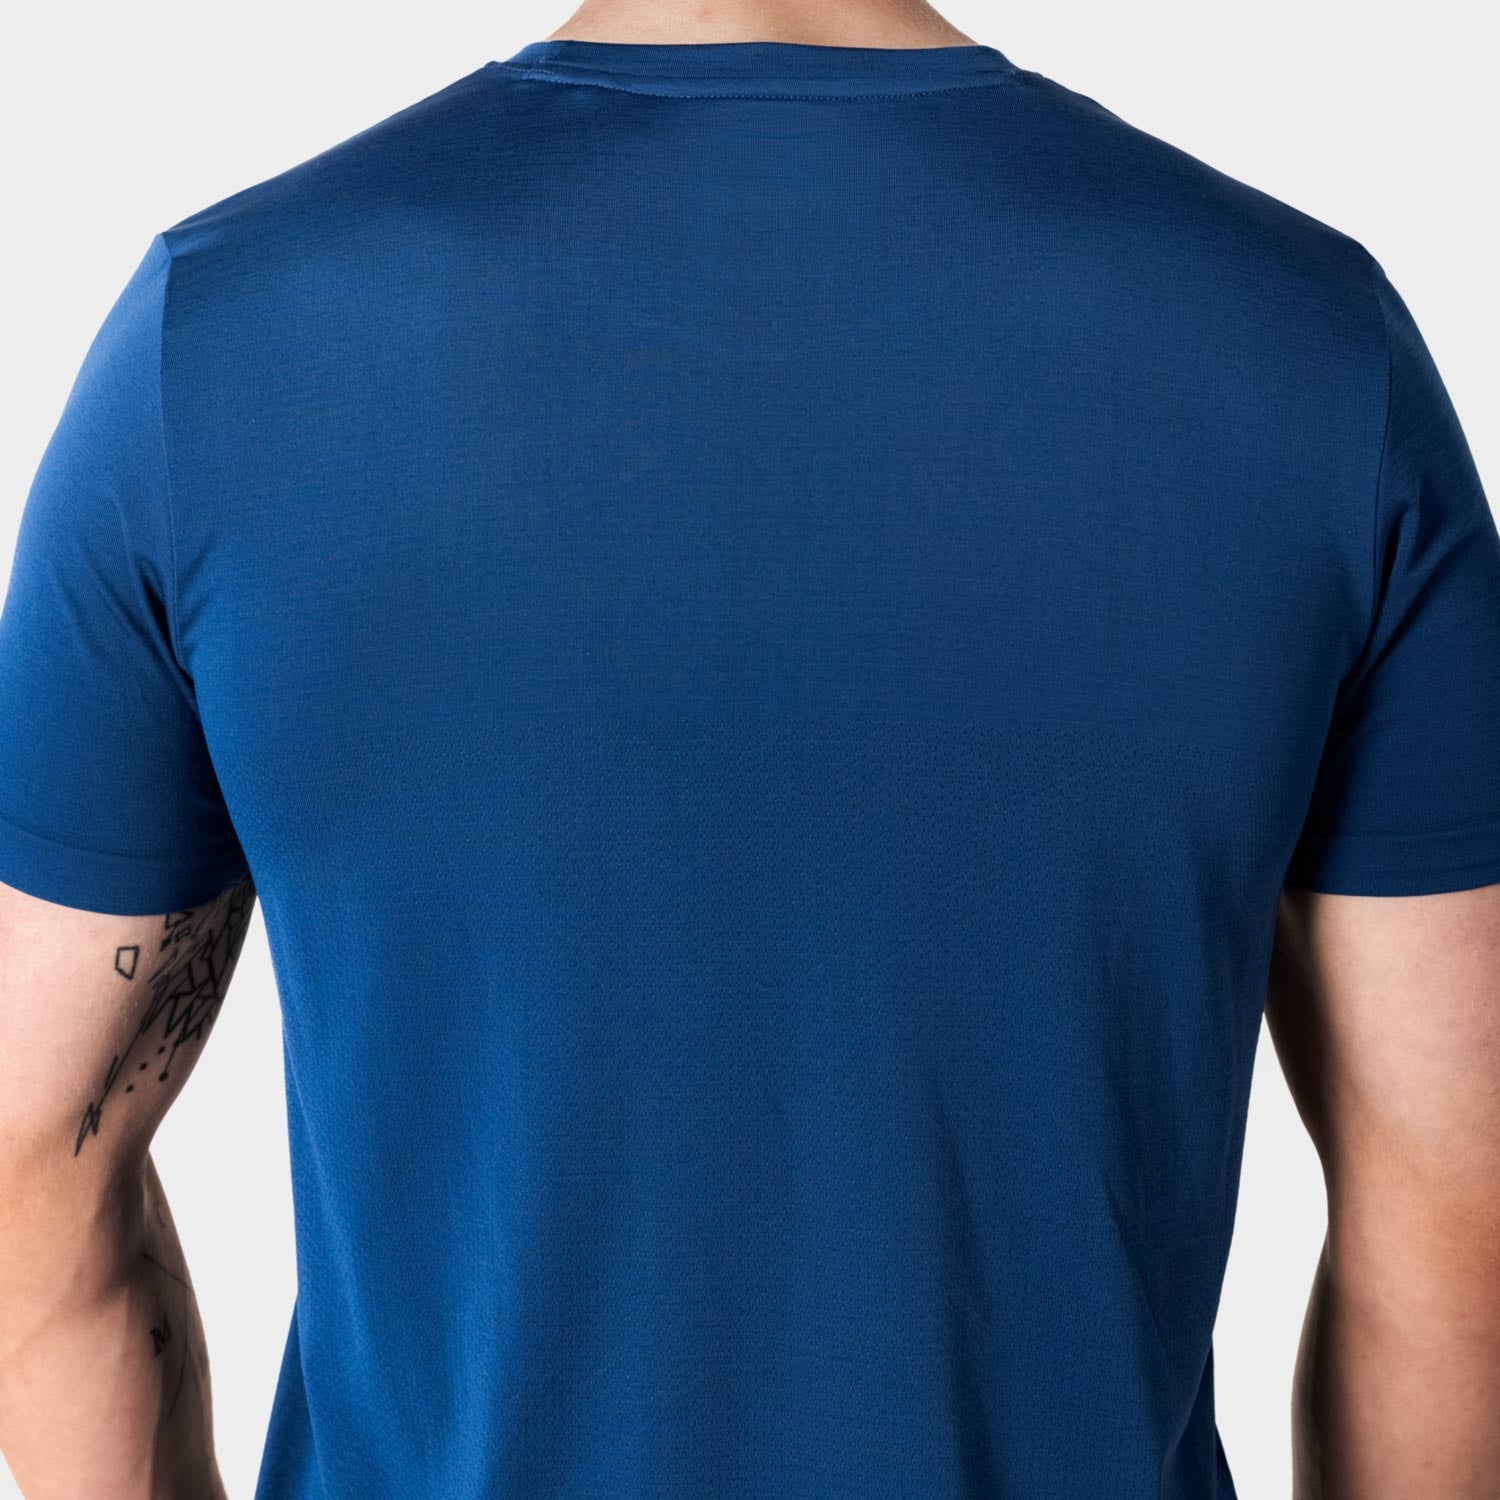 Liiteguard RE-LIITE T-SHIRT (Herr) T-shirts Blue melange